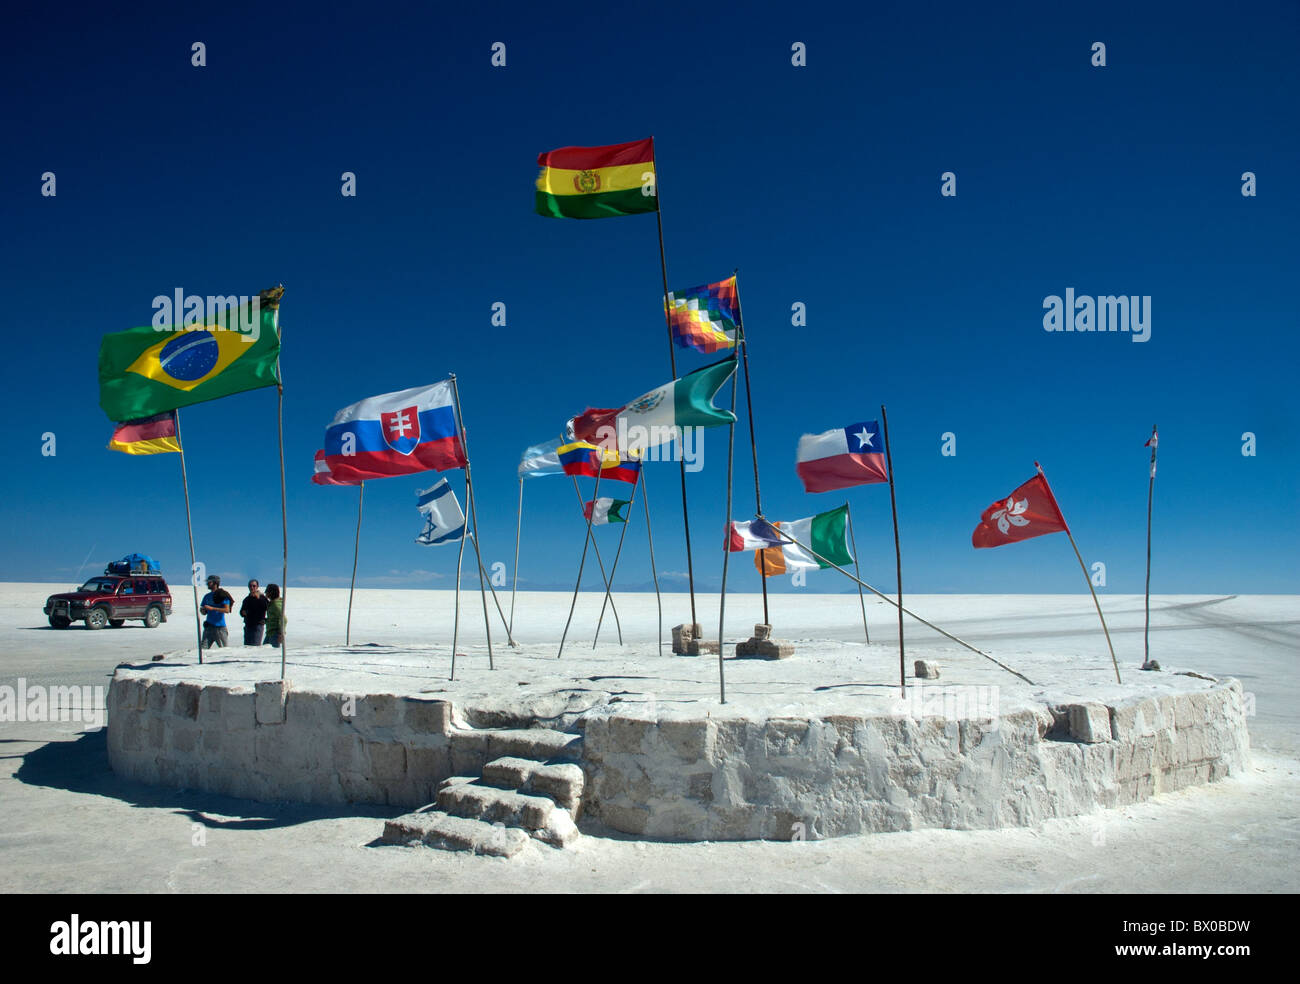 International flags at the Salt Hotel, Salar de Uyuni salt flats, Bolivia. Stock Photo